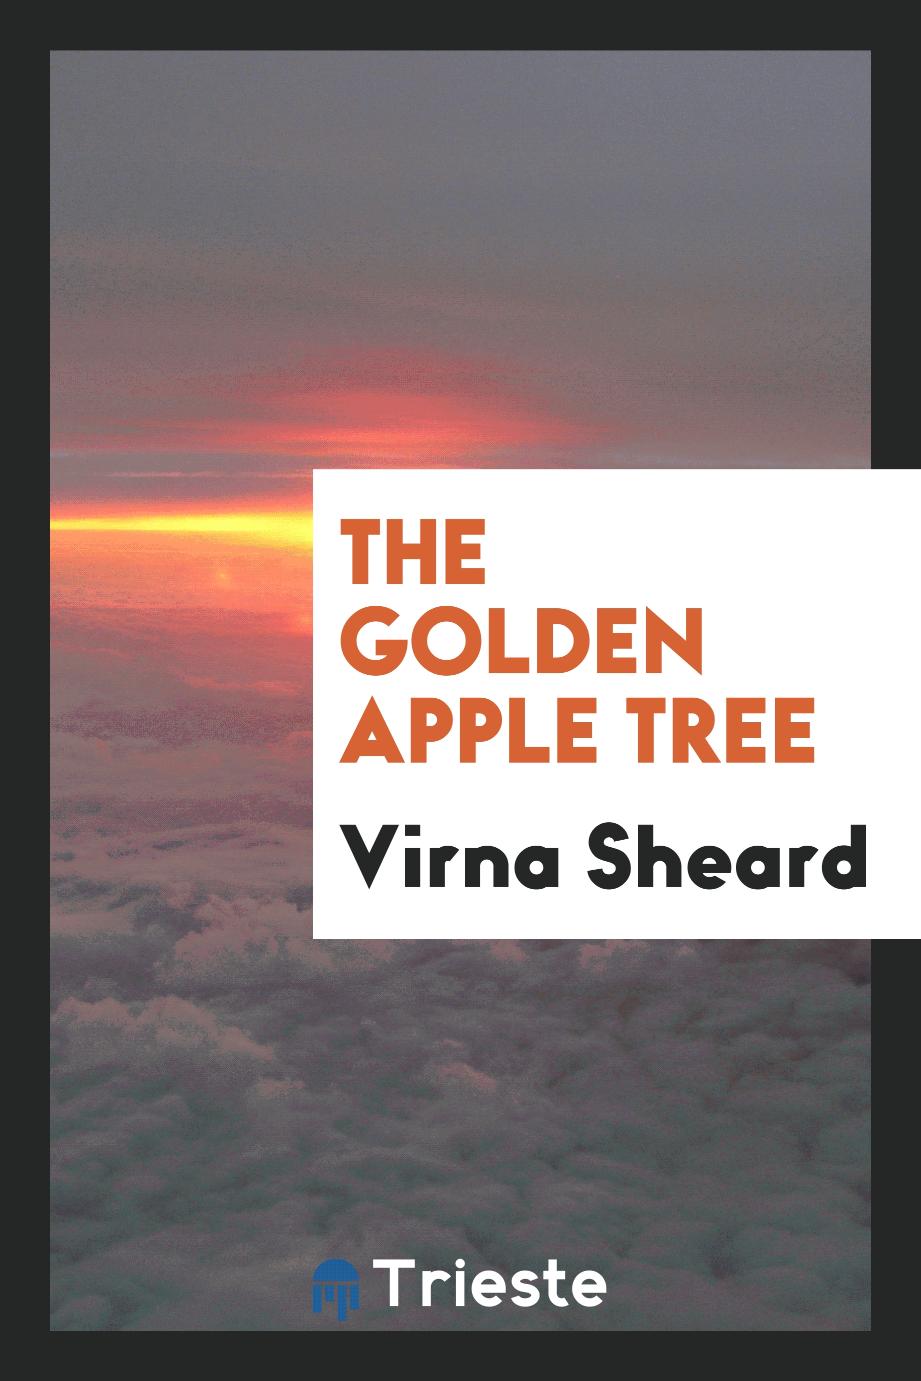 The golden apple tree